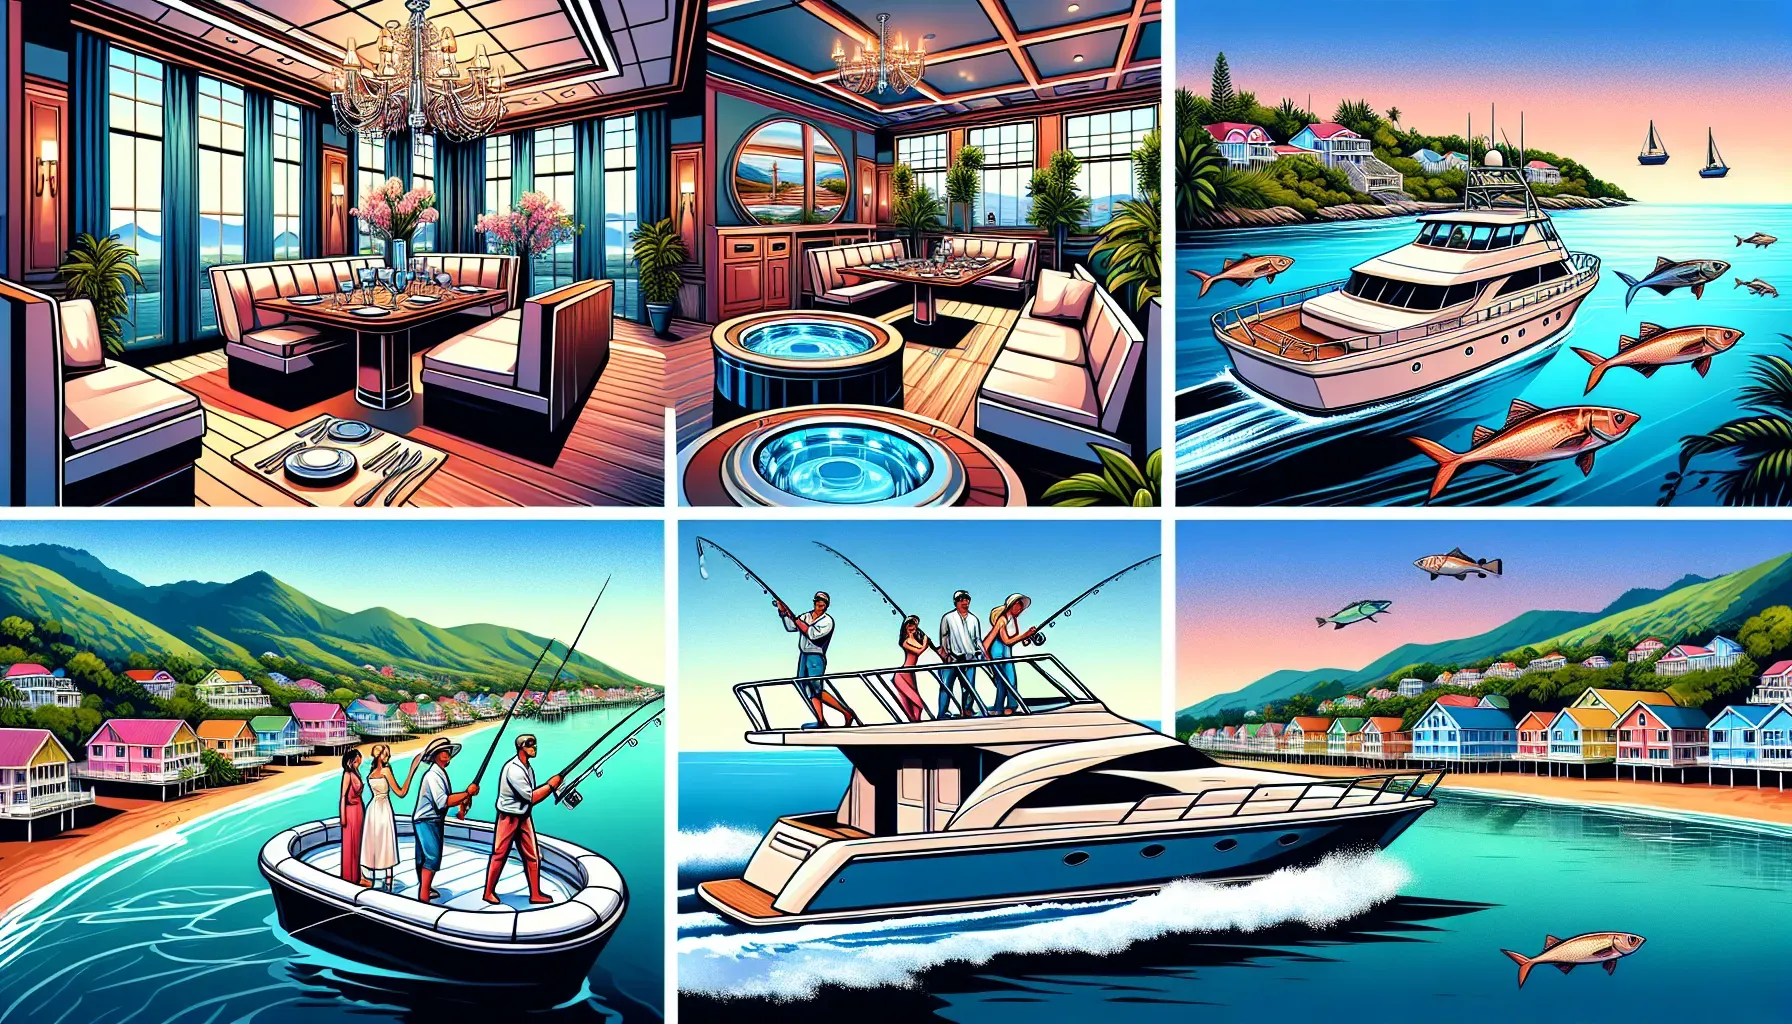 Poseidon Charter Boat: Unforgettable Luxury Adventures